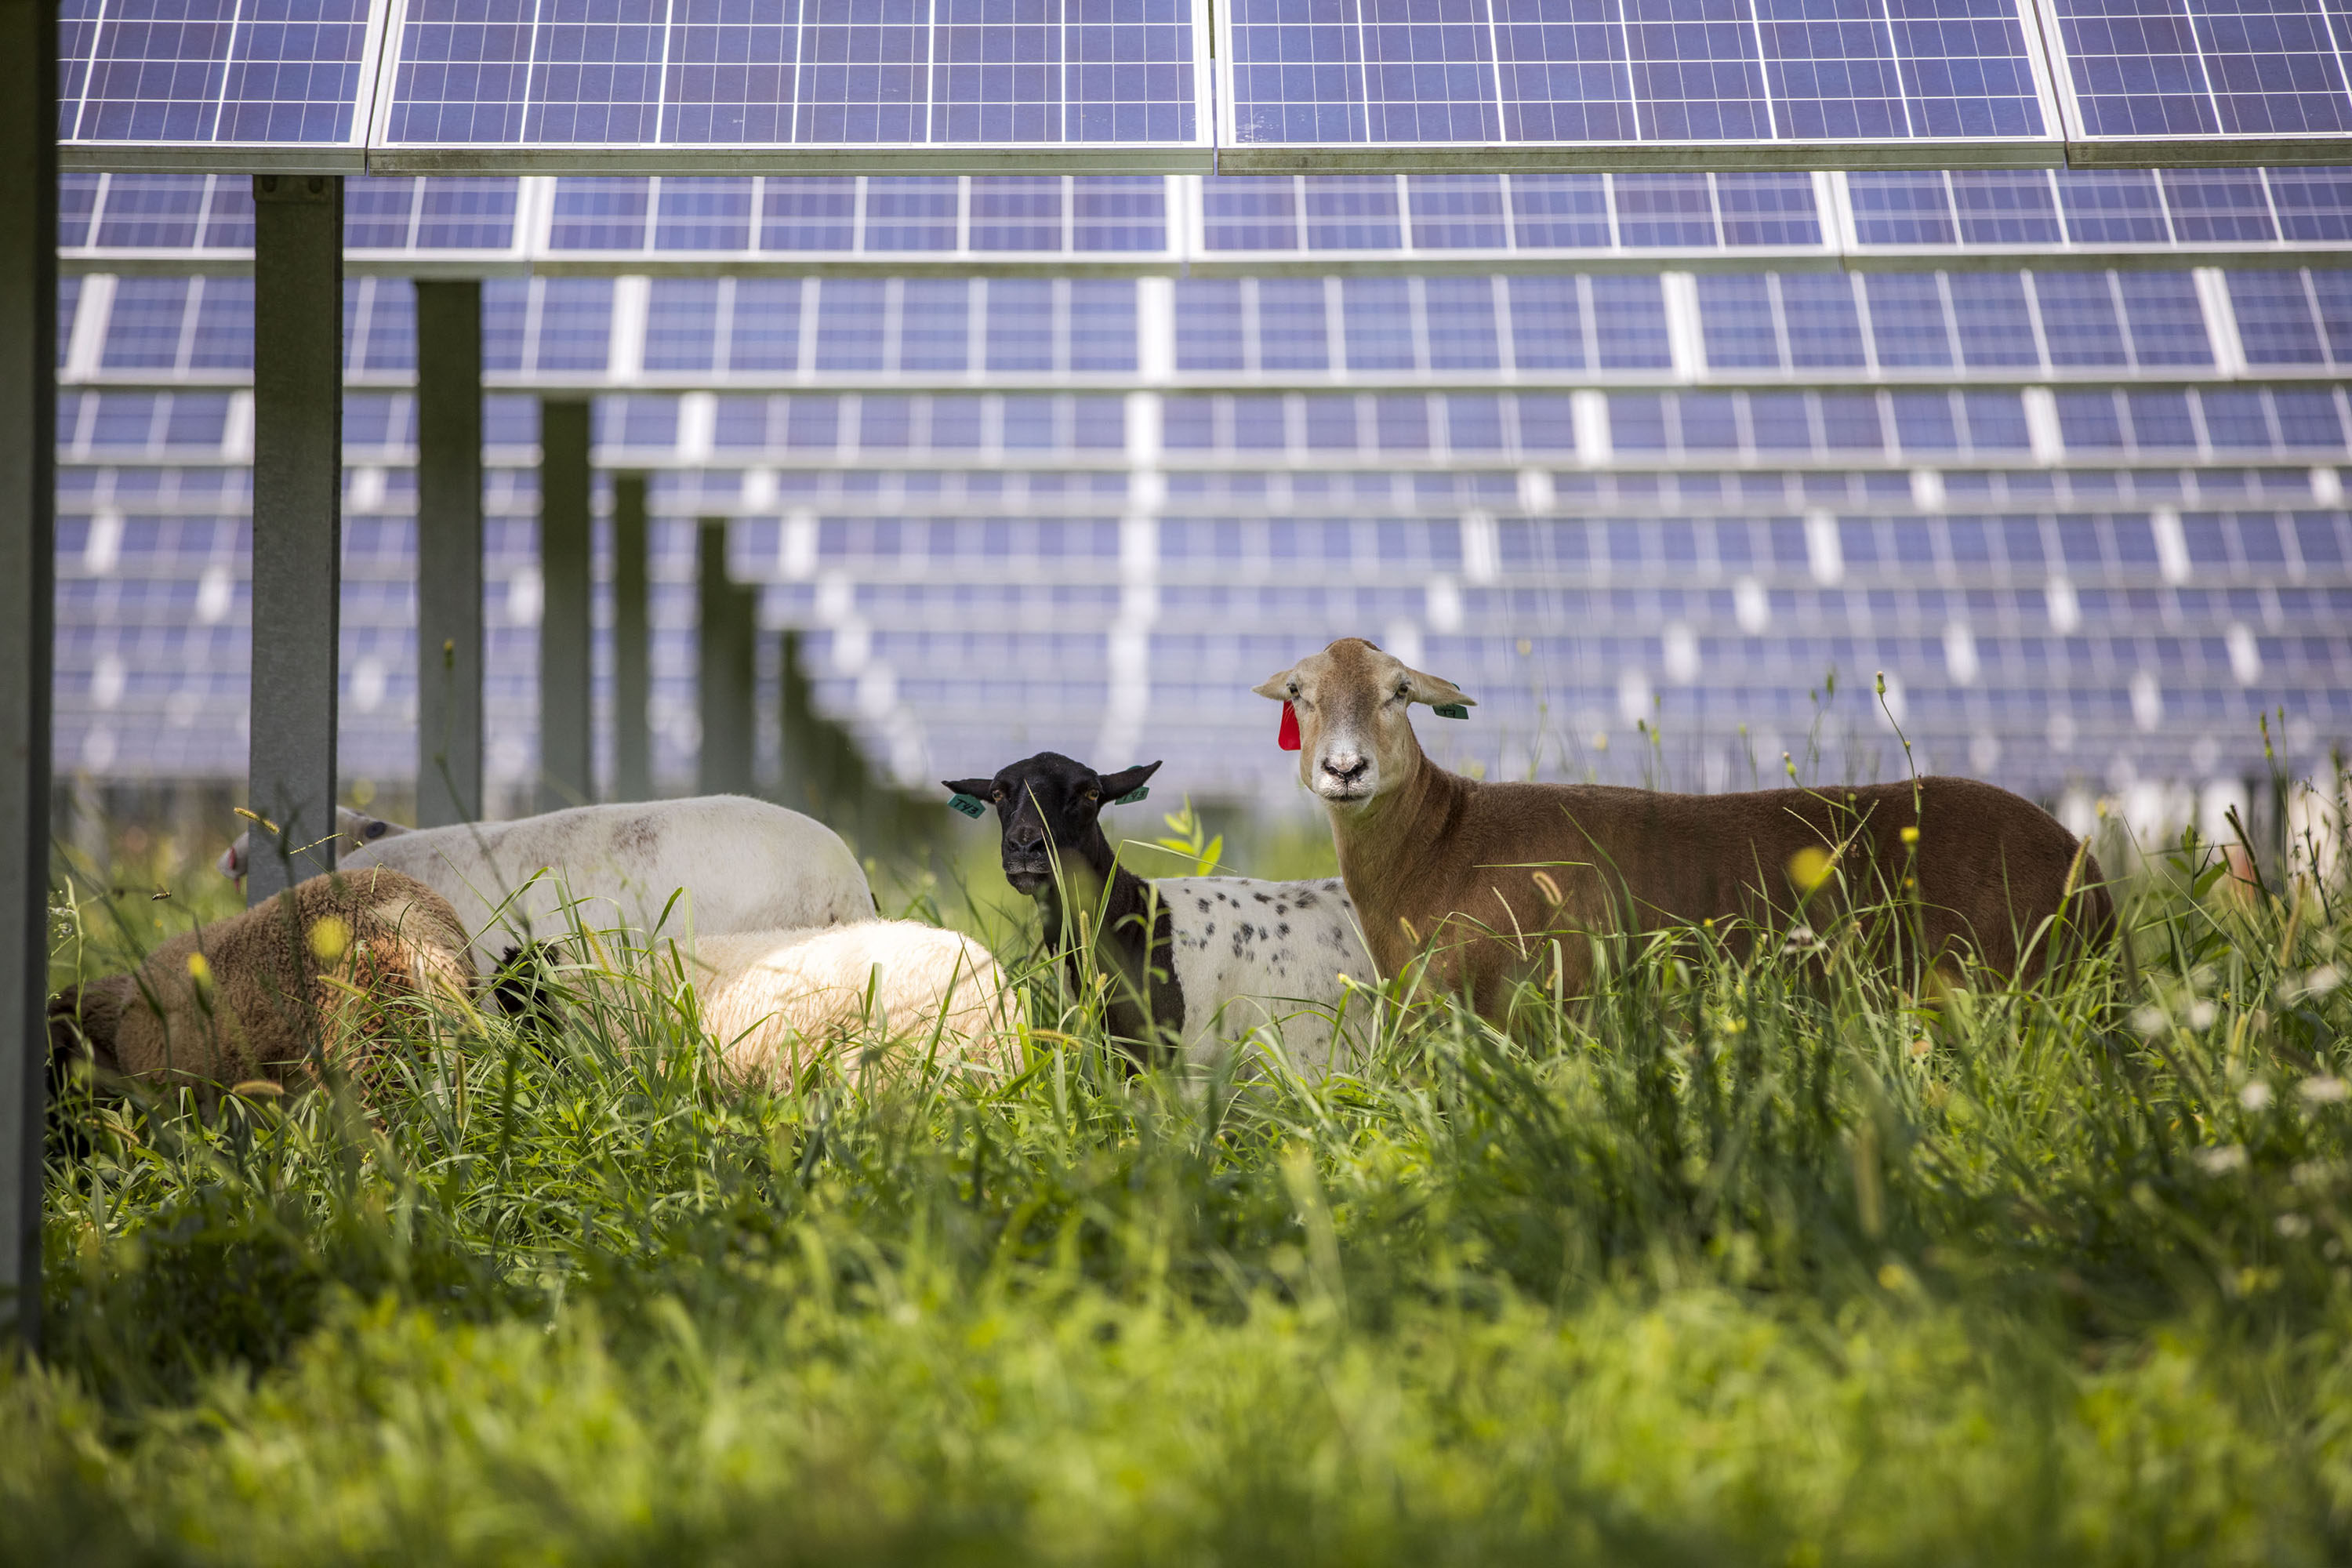 Sheep graze under solar panels at Dominion Energy’s Sussex Drive Solar farm in Stony Creek, Virginia, US. Photo: TNS